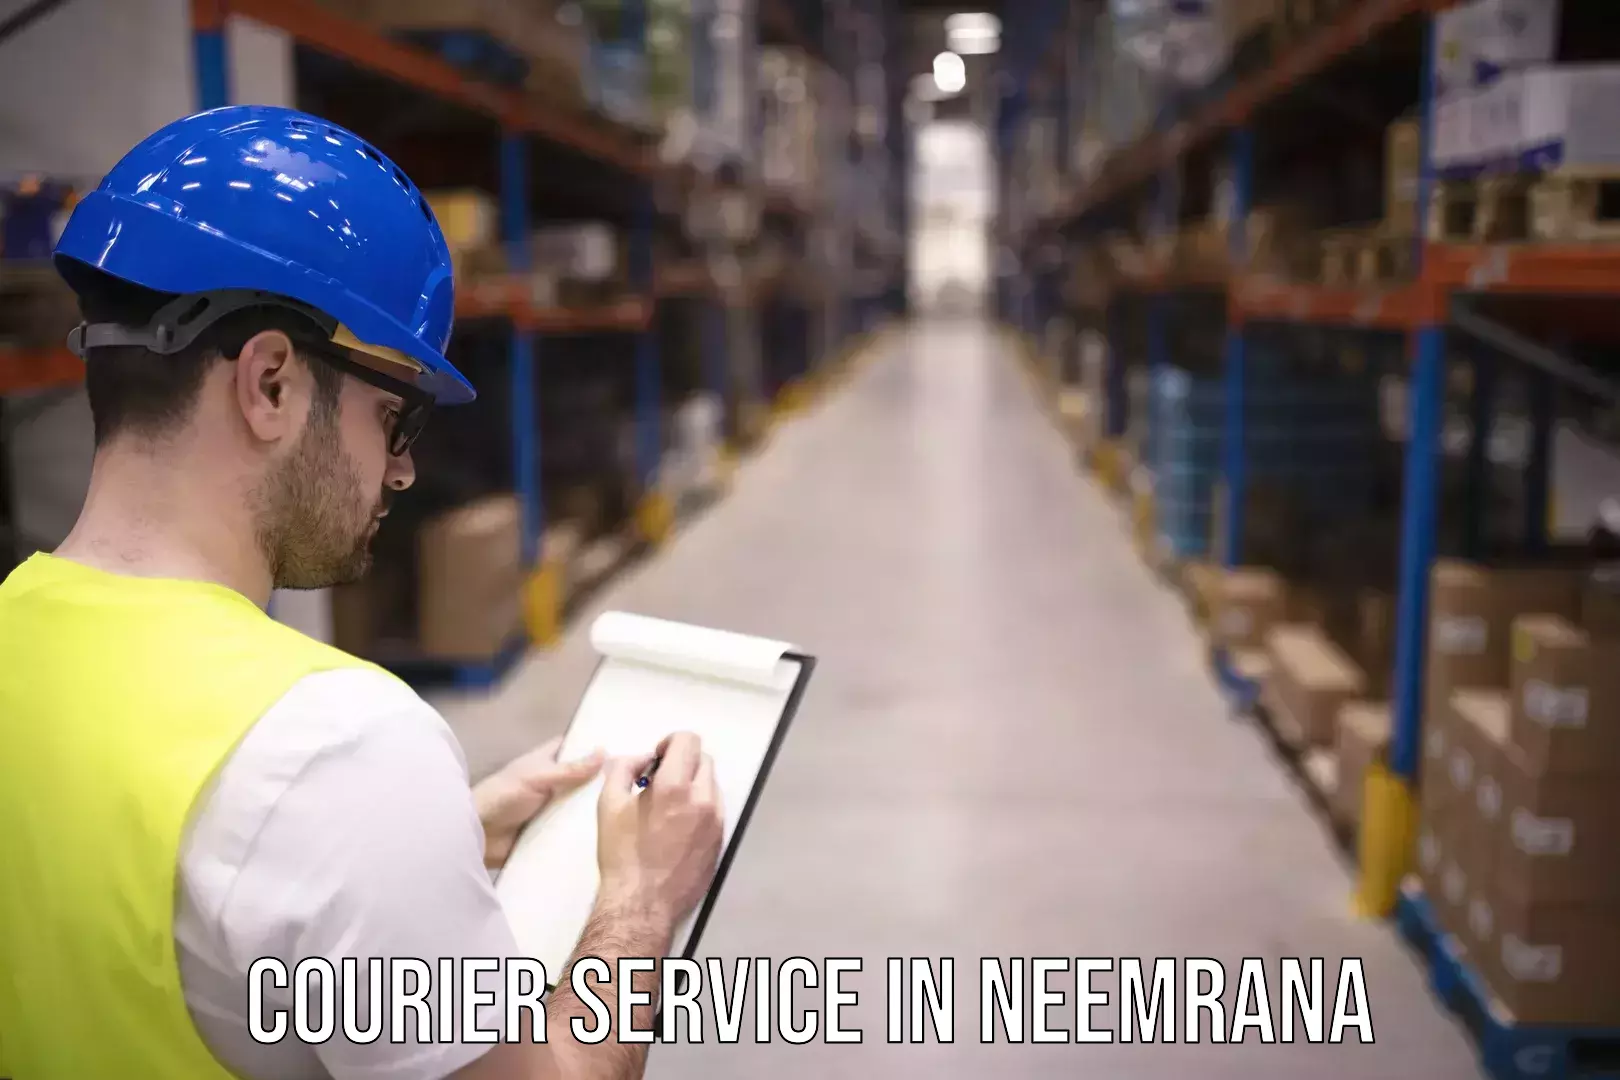 24/7 courier service in Neemrana